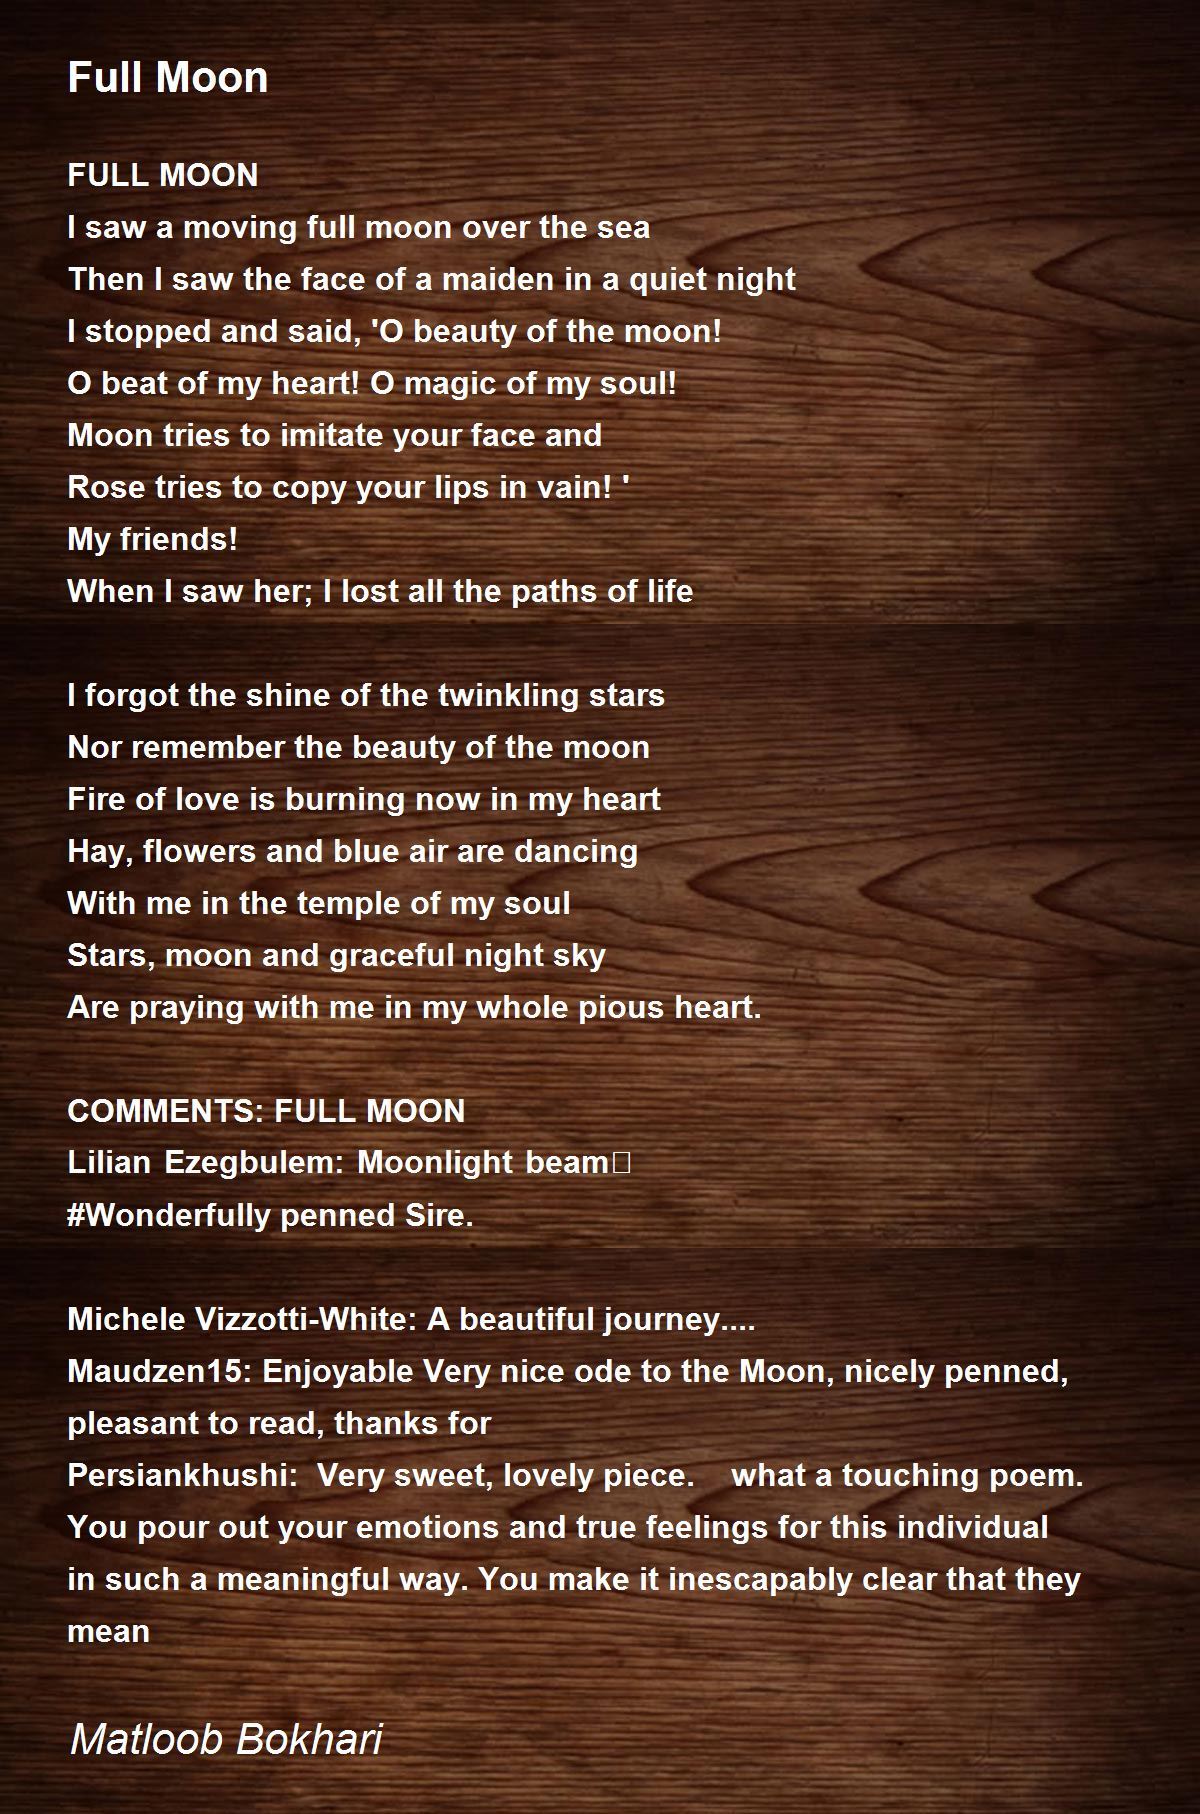 Full Moon - Full Moon Poem by Matloob Bokhari